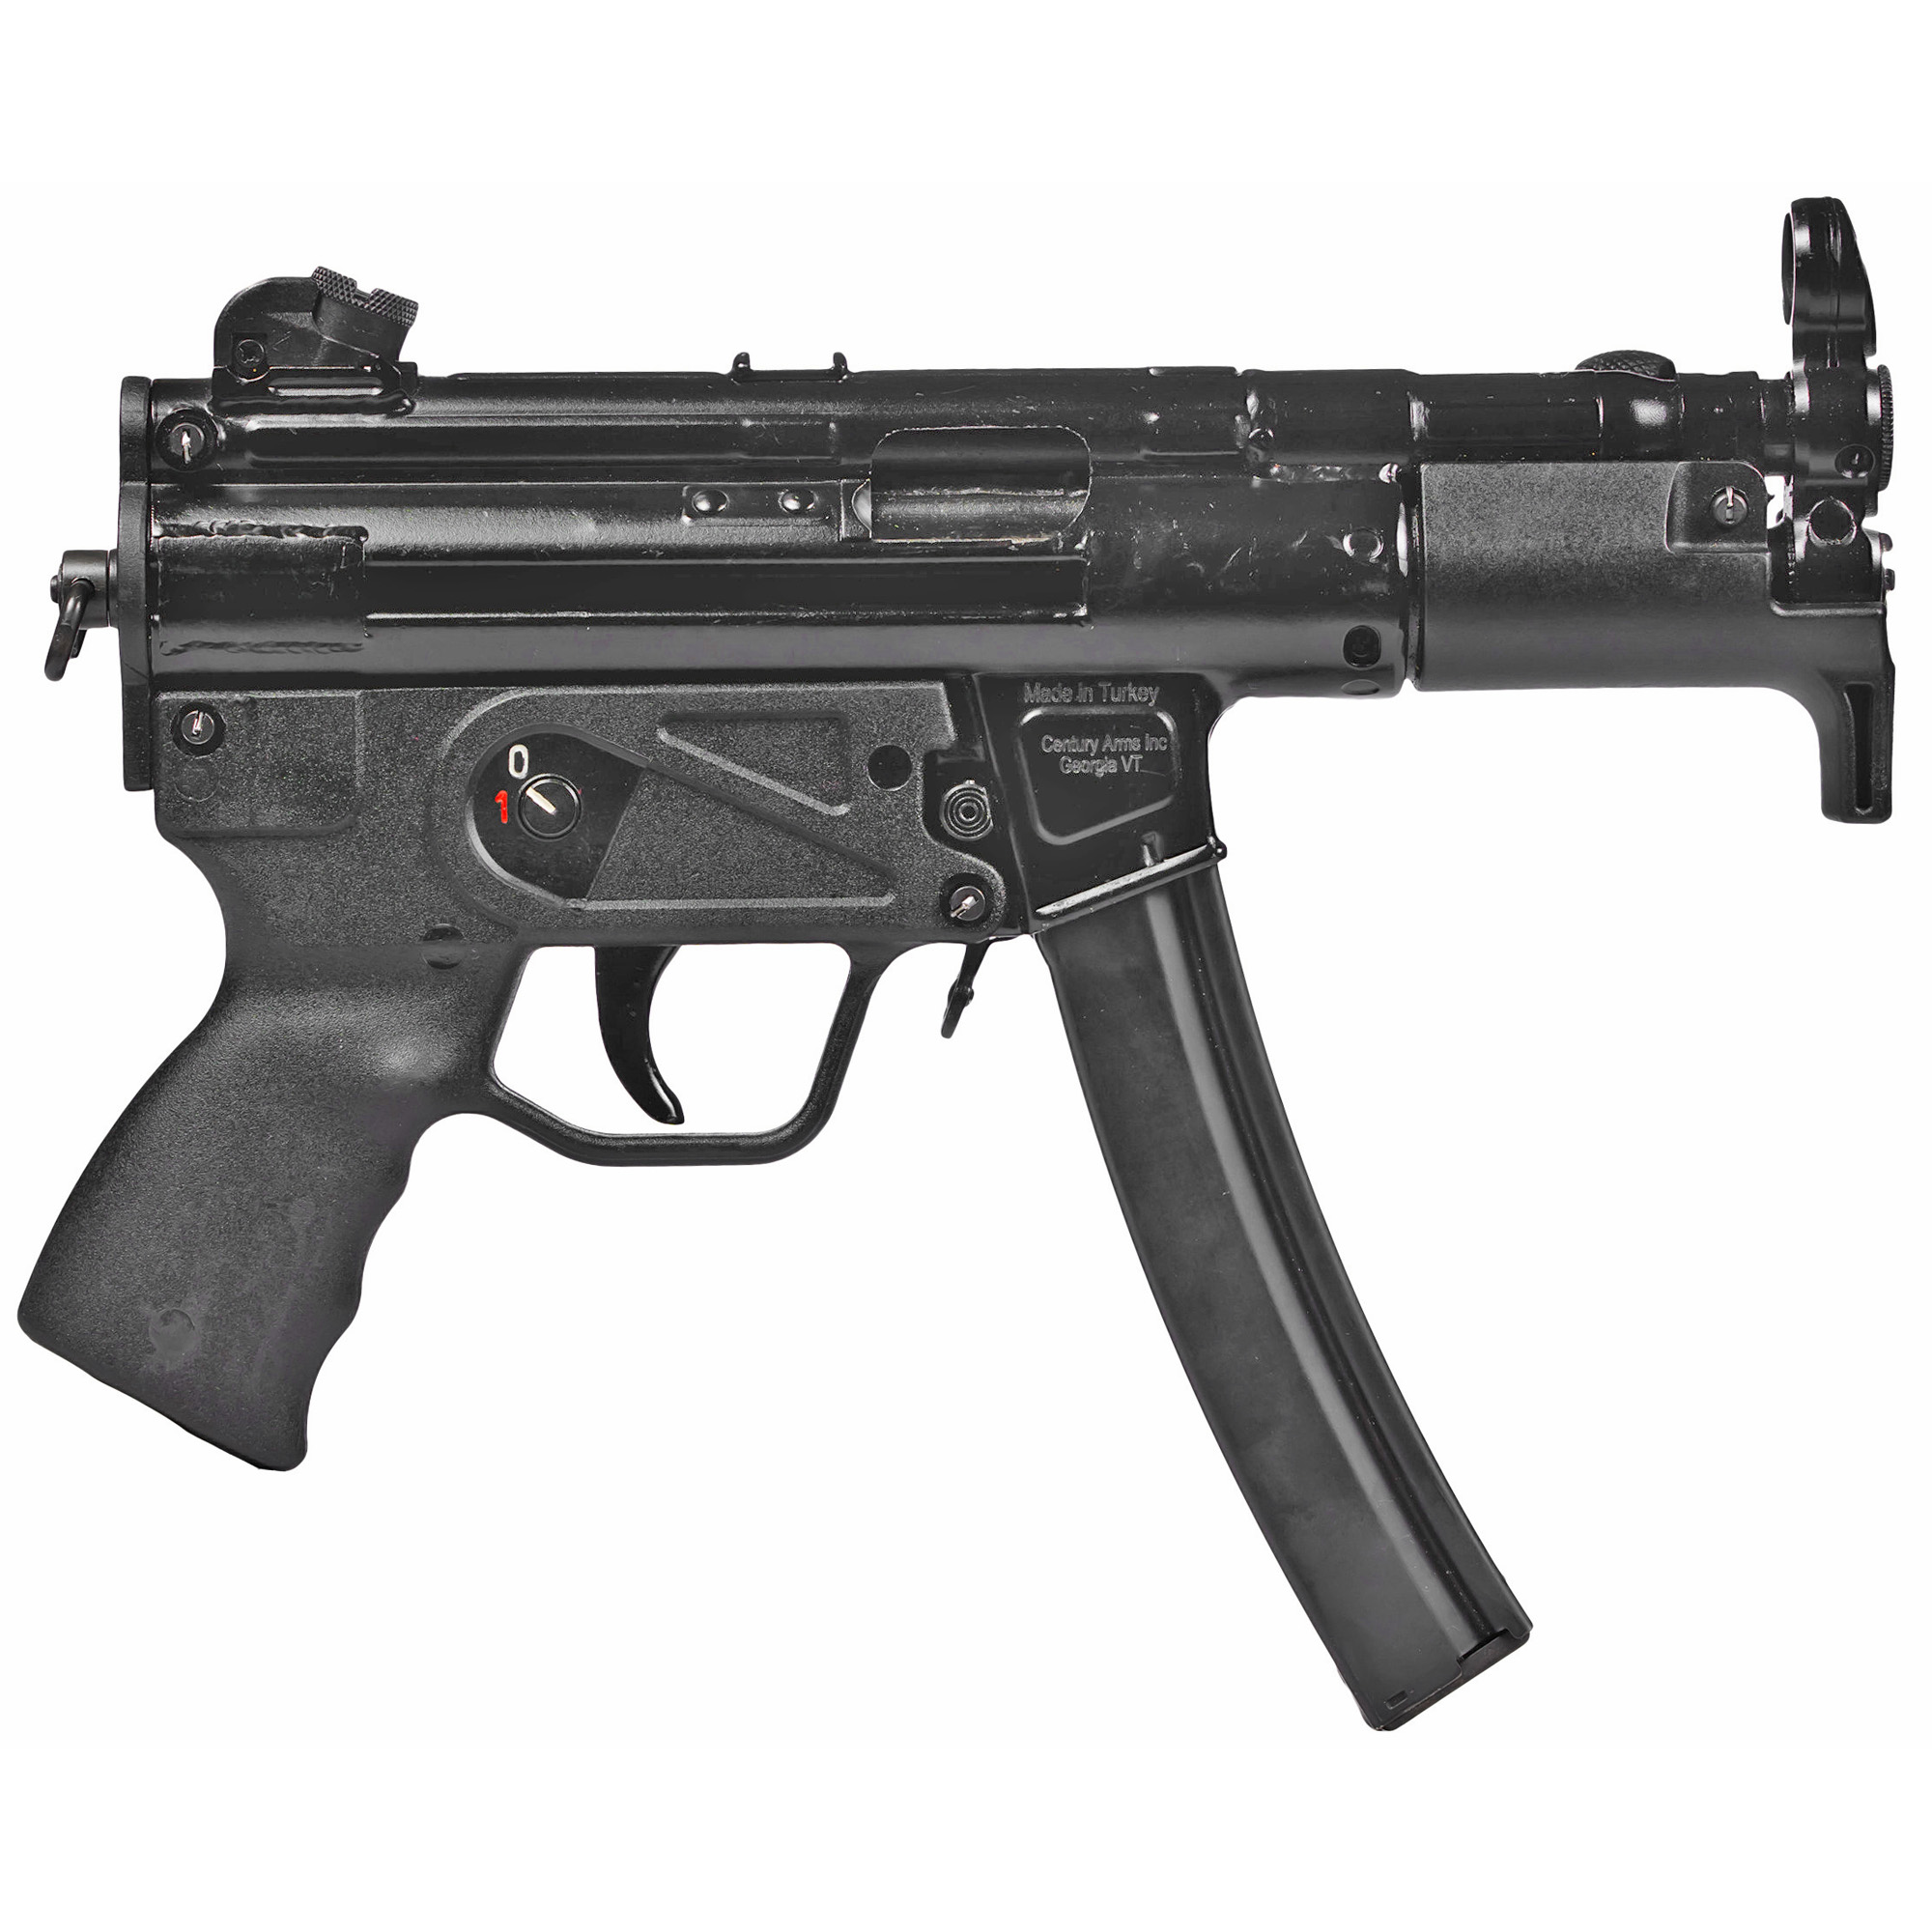 https://cityarsenal.com/product/century-arms-ap5-9mm-pistol-hg6036-n/